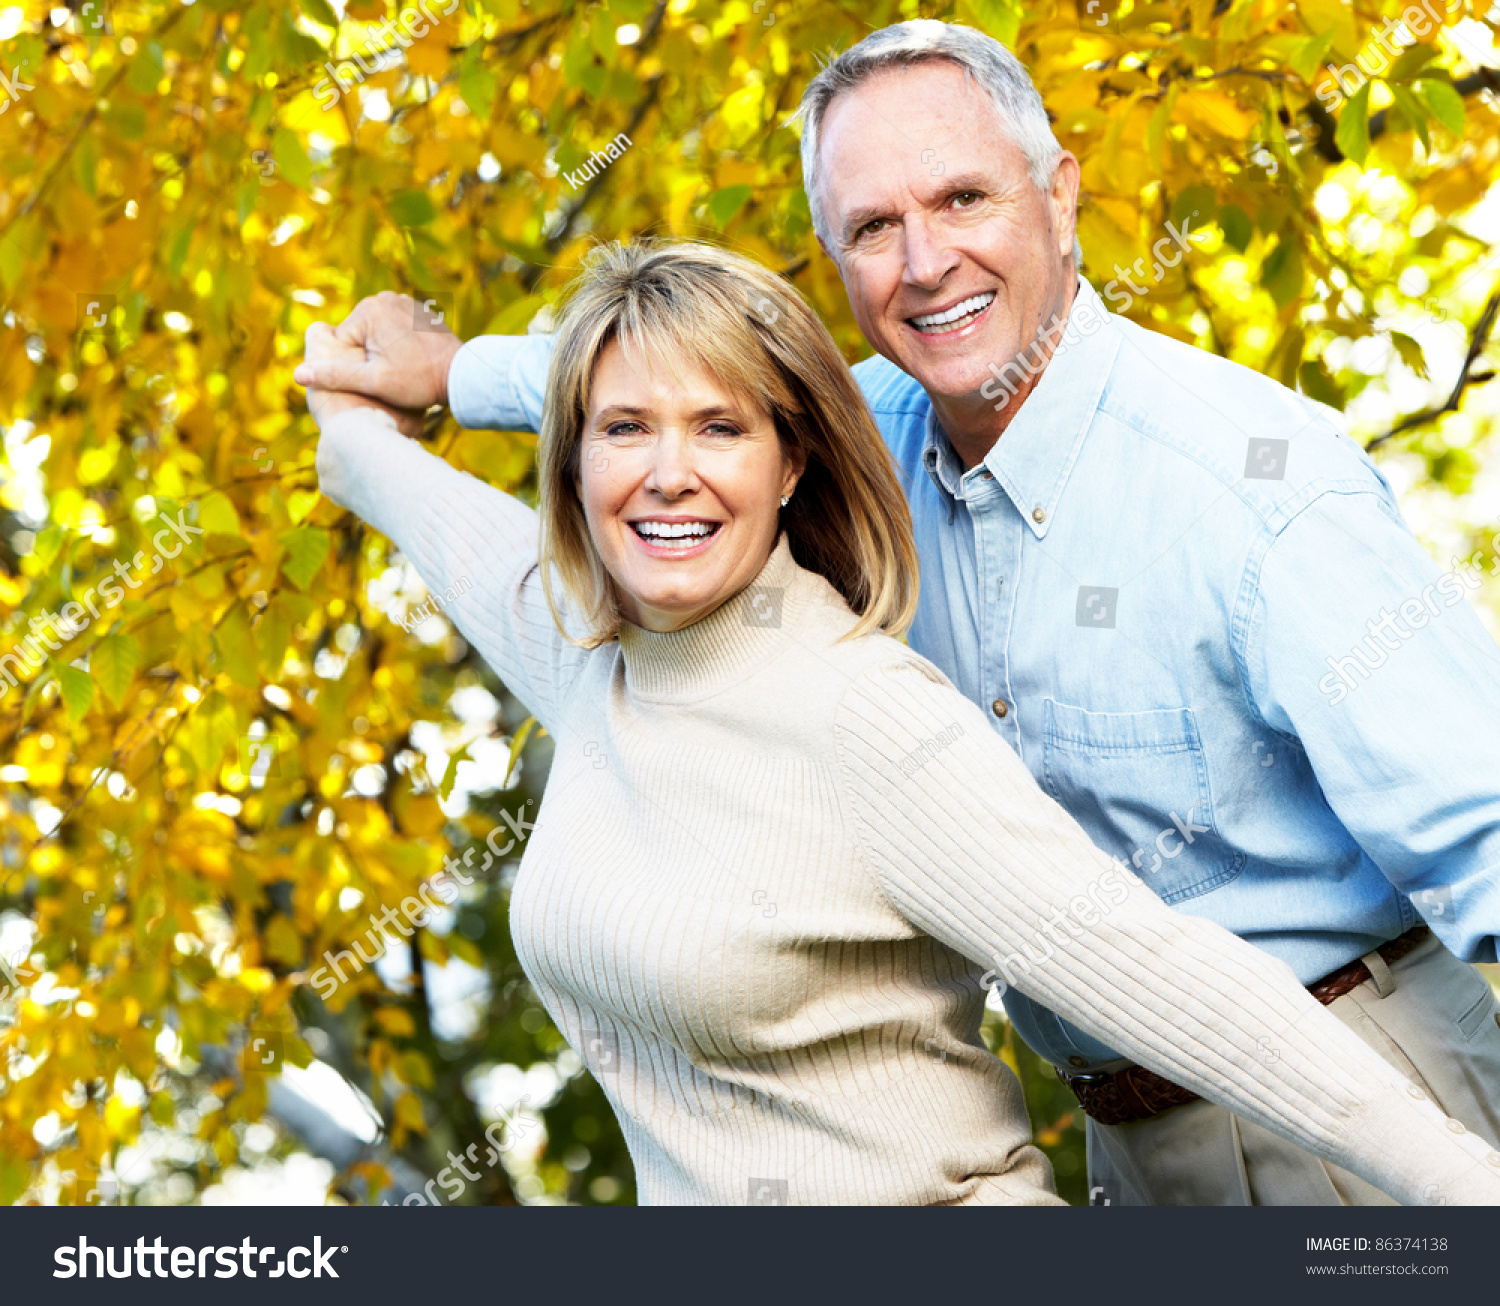 45 летний мужчина и девушка. Люди зрелого возраста. Мужчина и женщина в возрасте. Счастливые люди в возрасте. Возраст человека.